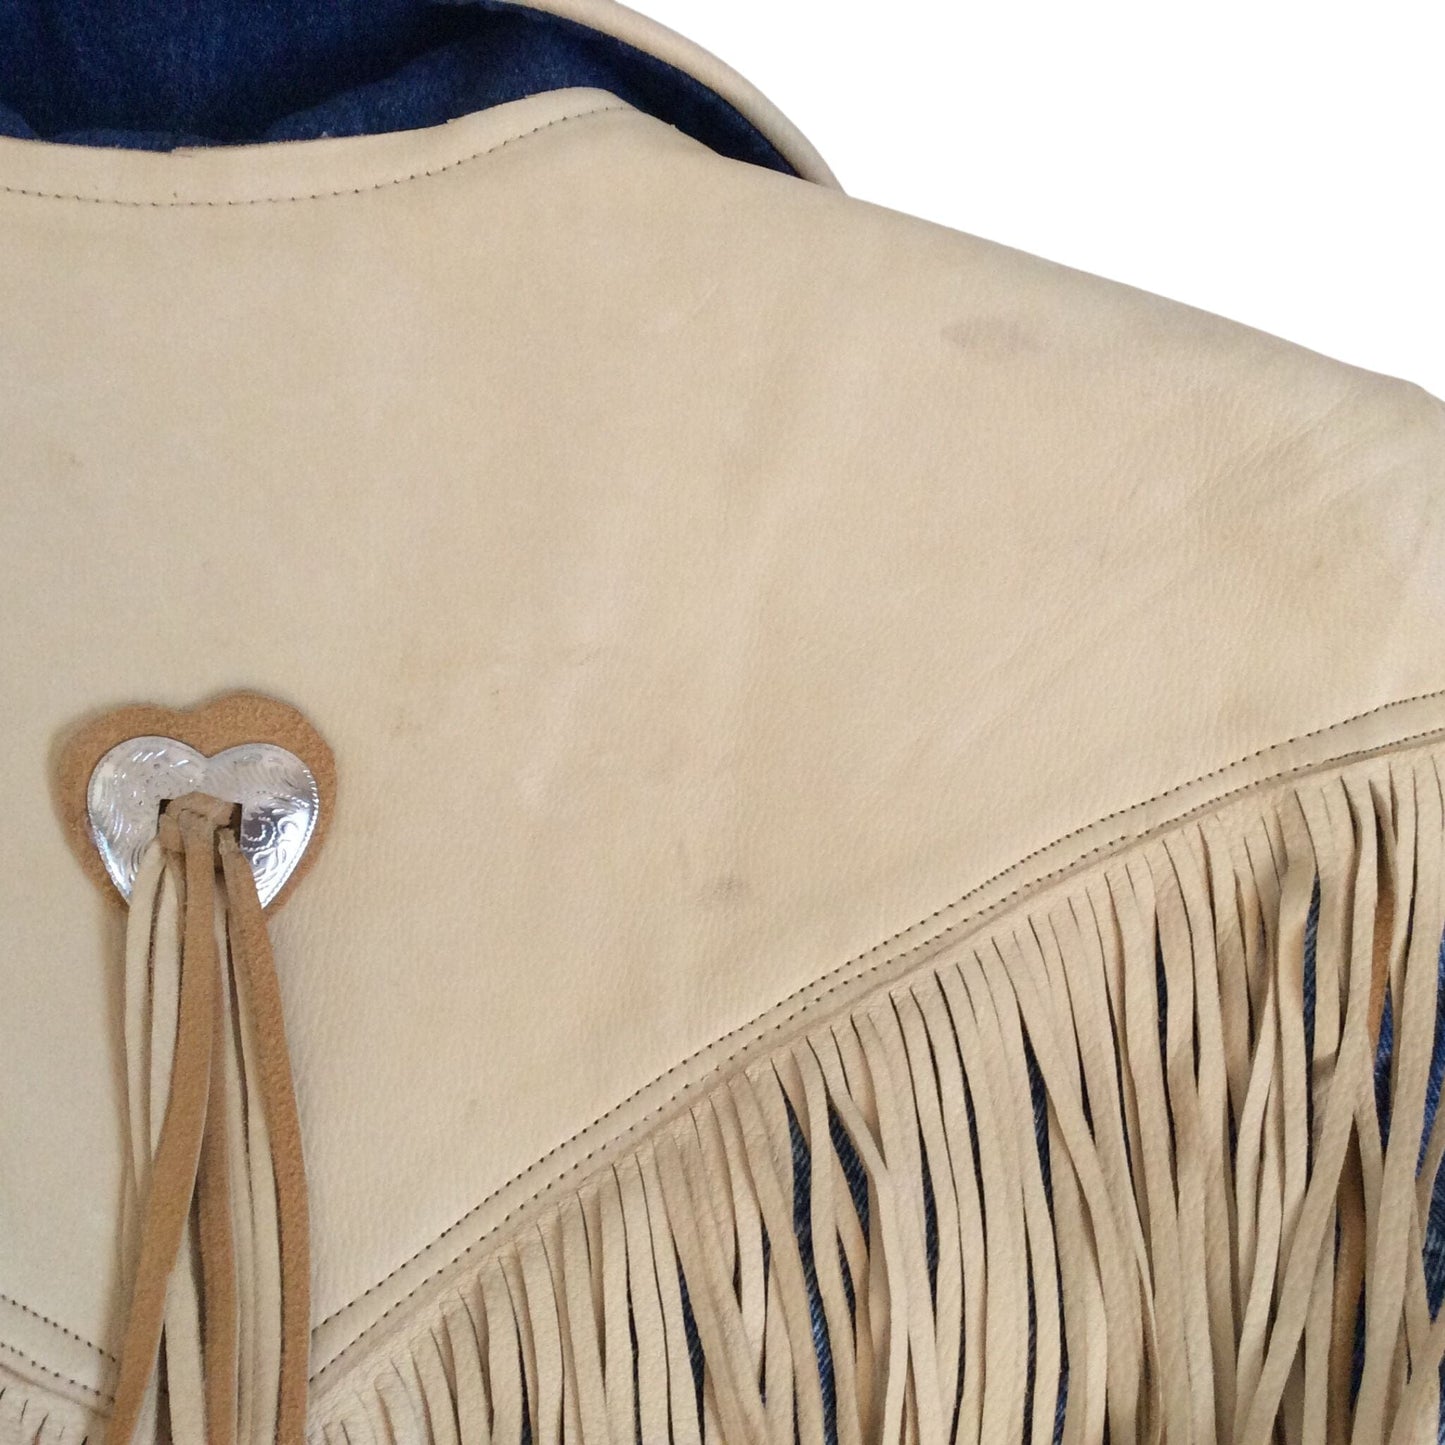 Vintage Fringed Jacket Petite / Blue / Western